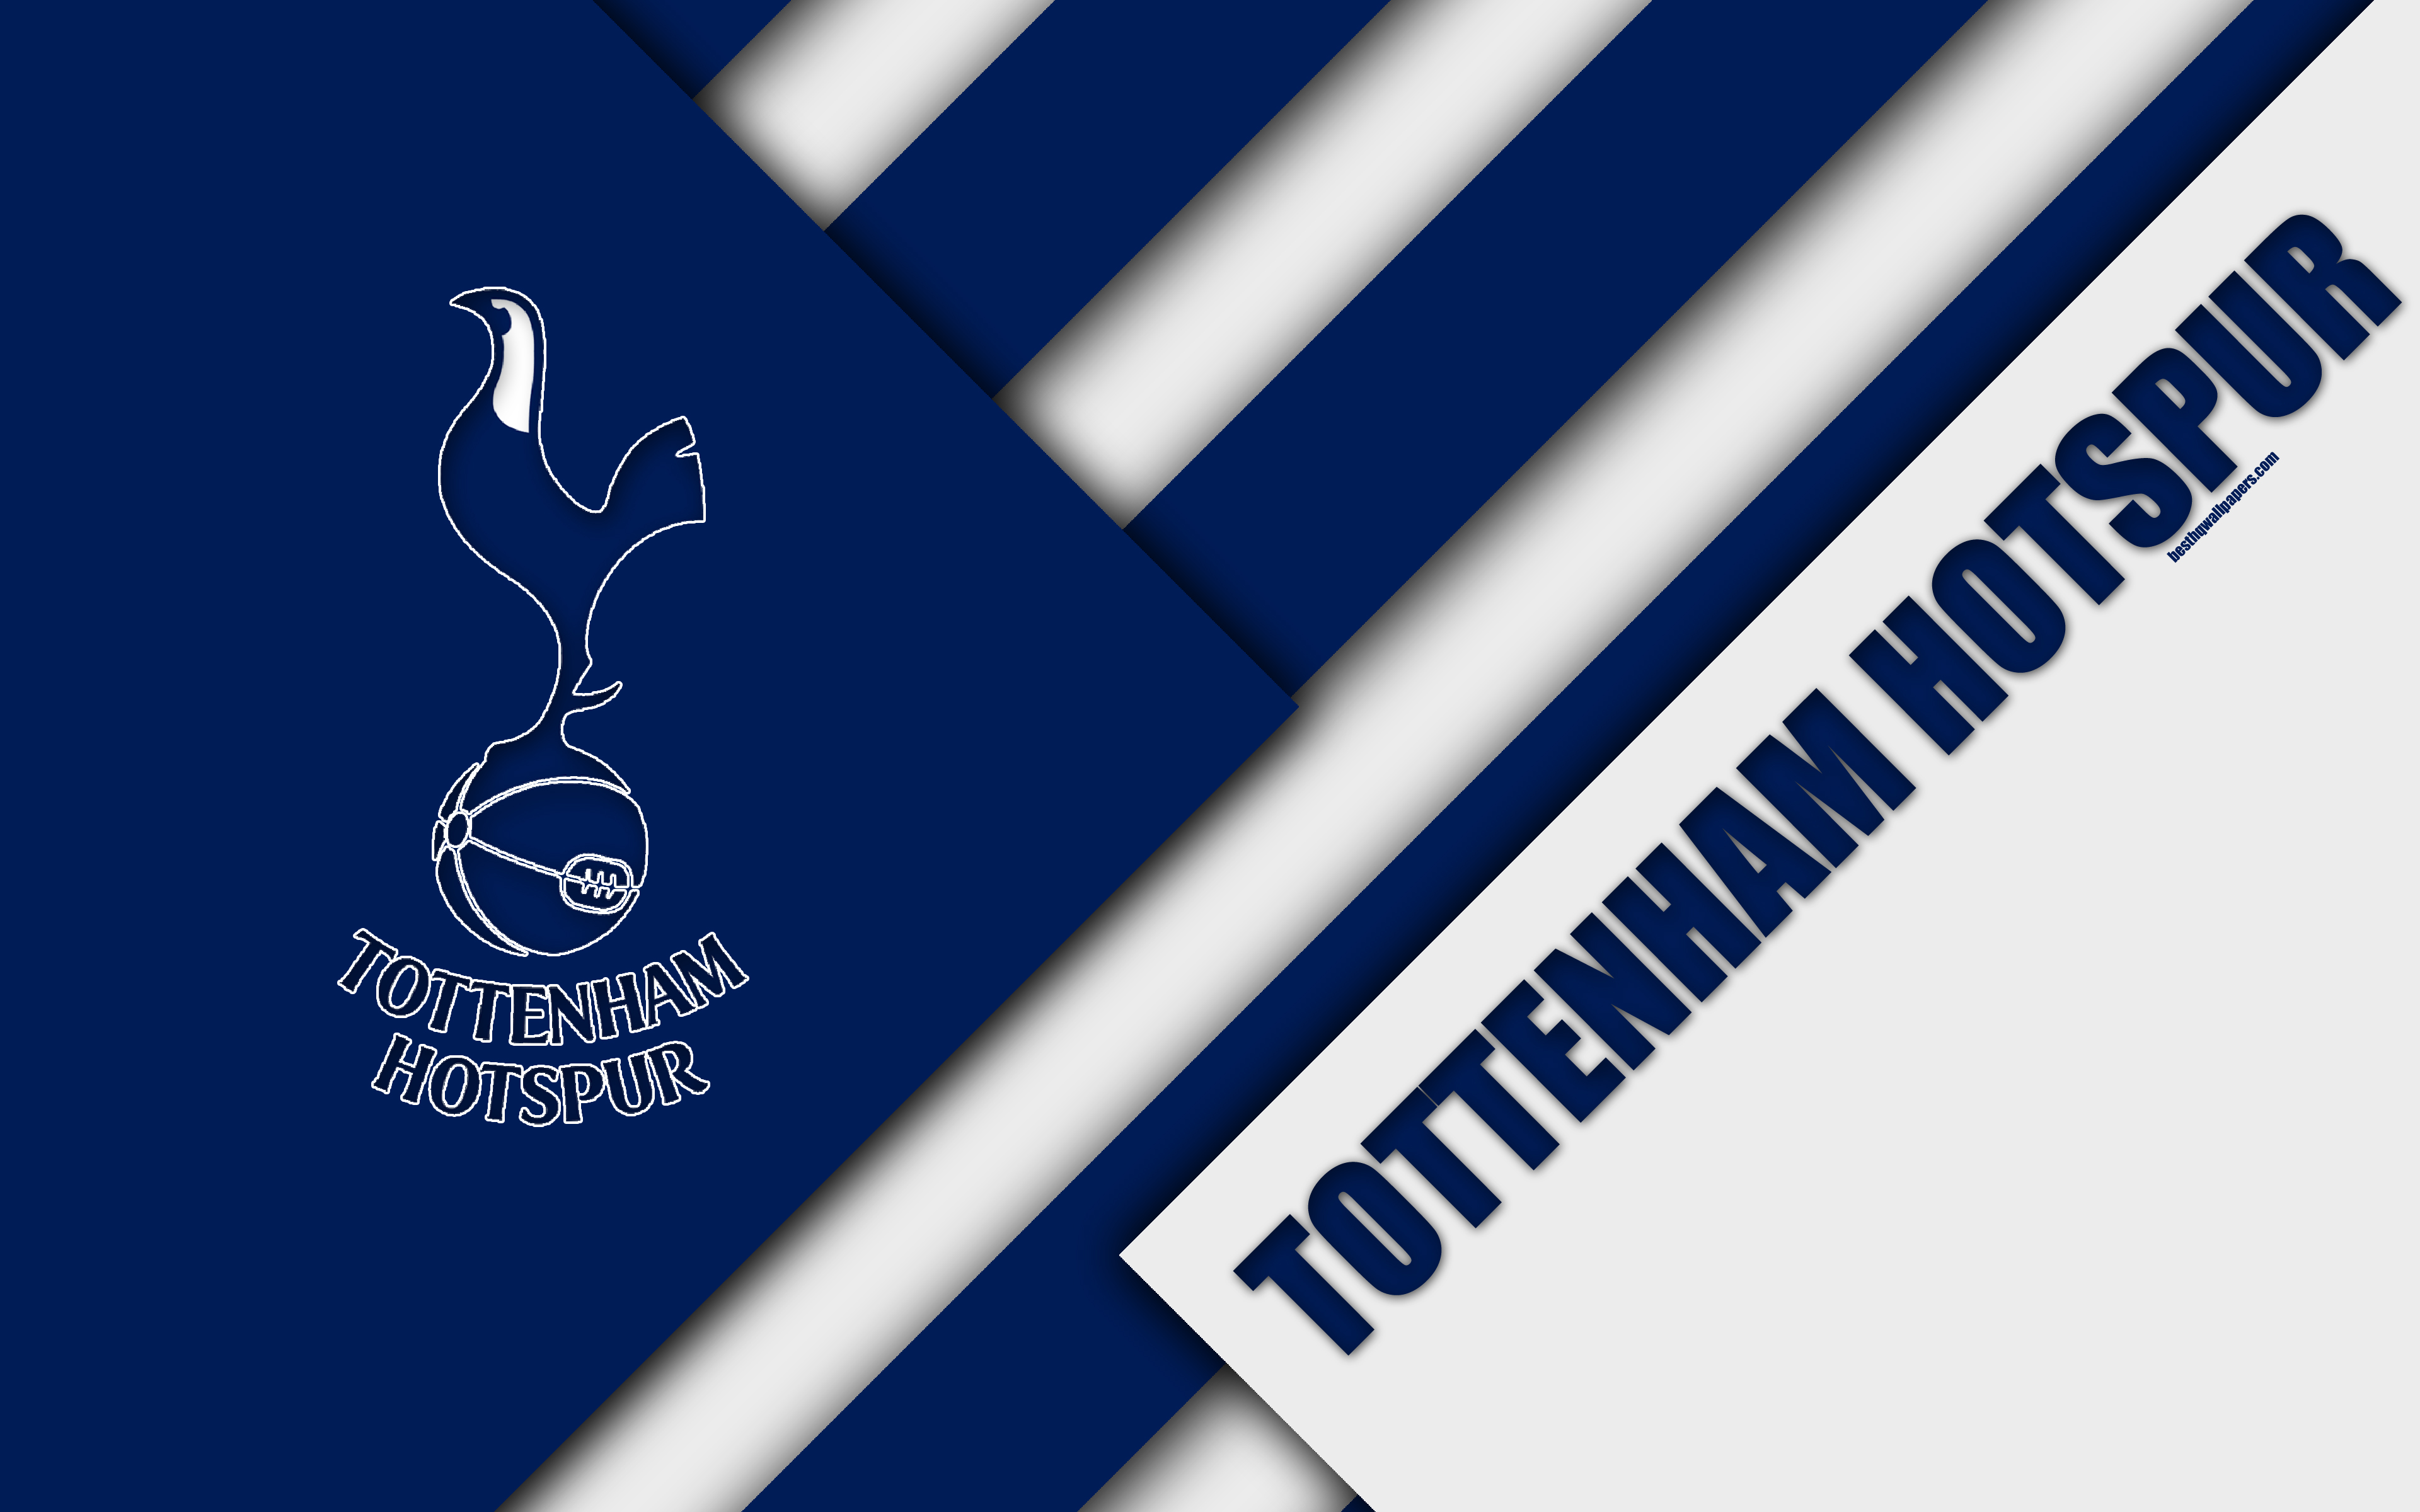 Tottenham Hotspur HD Wallpaper